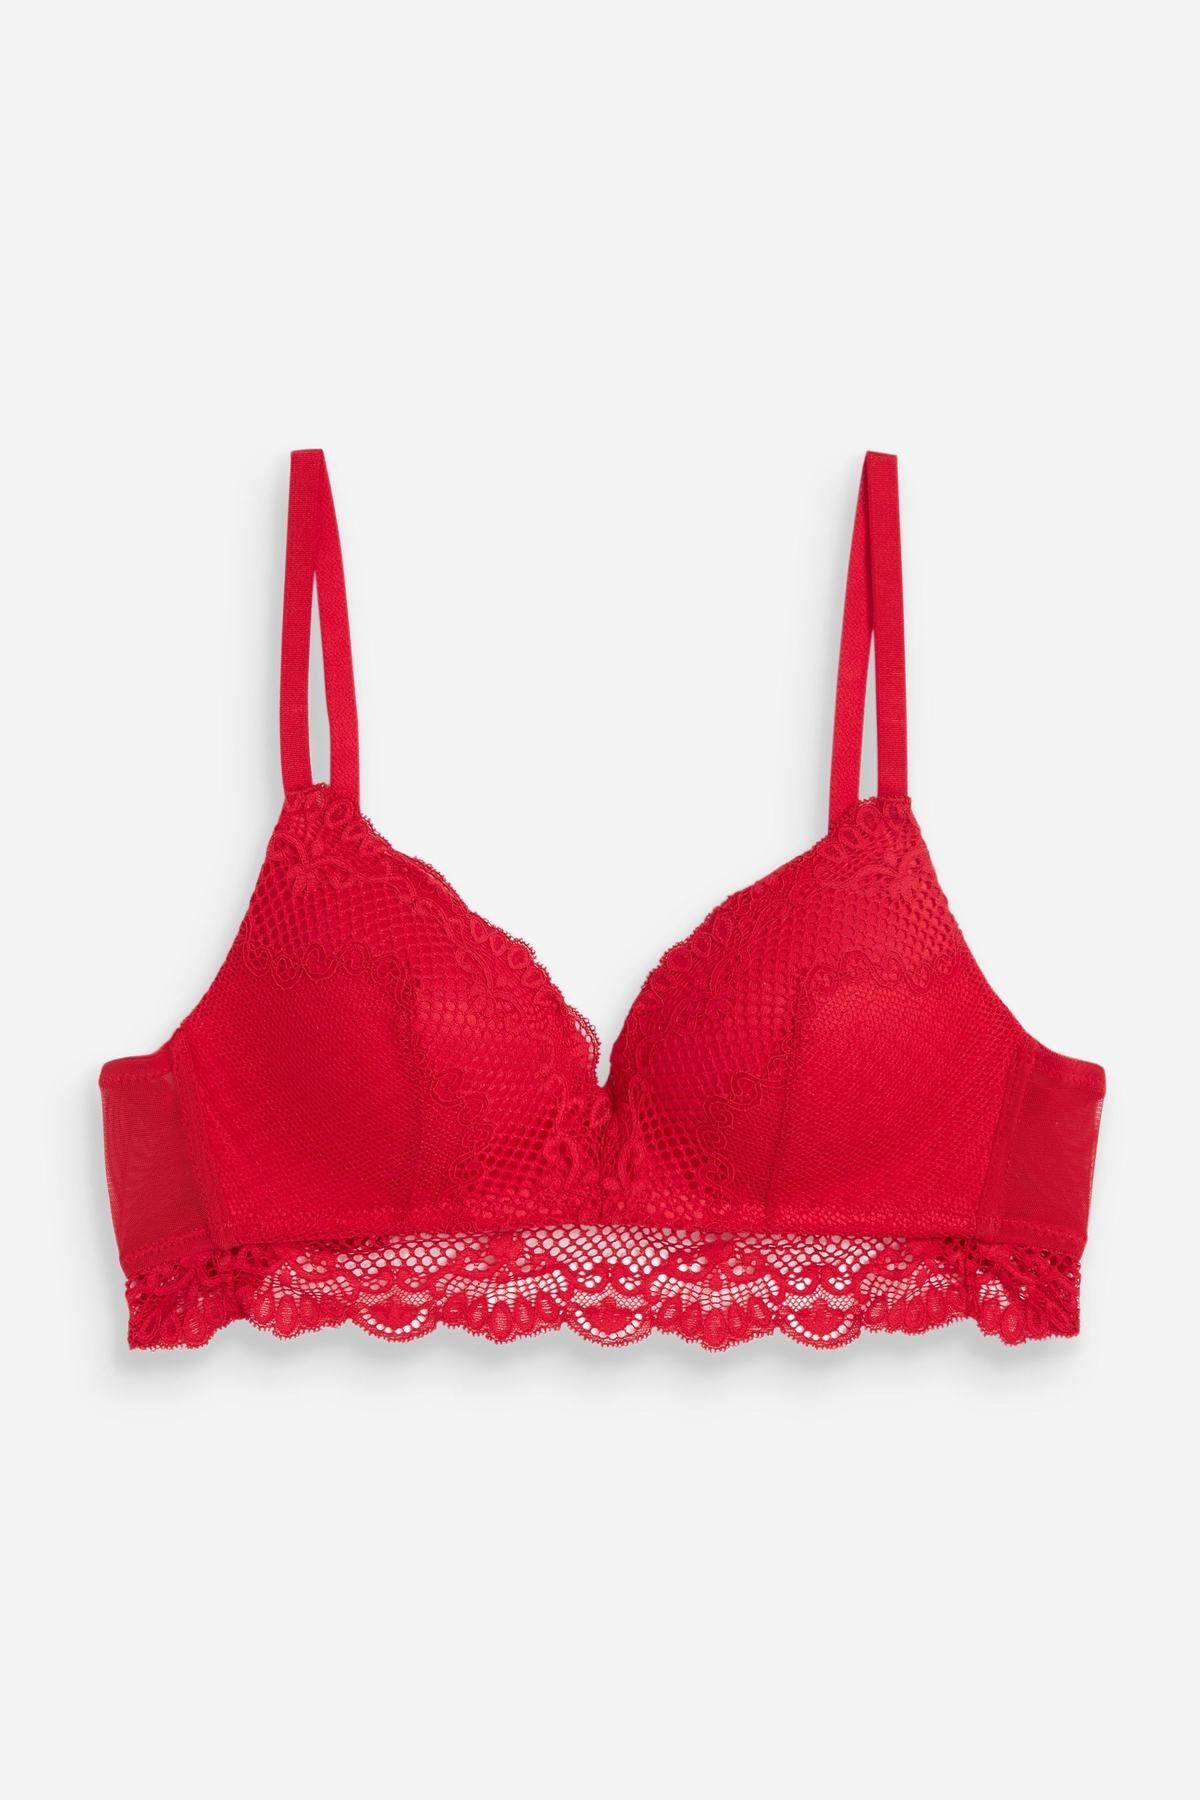 NEXT lace-bra-nxt-985726-red Charcoal Grey Women Bras